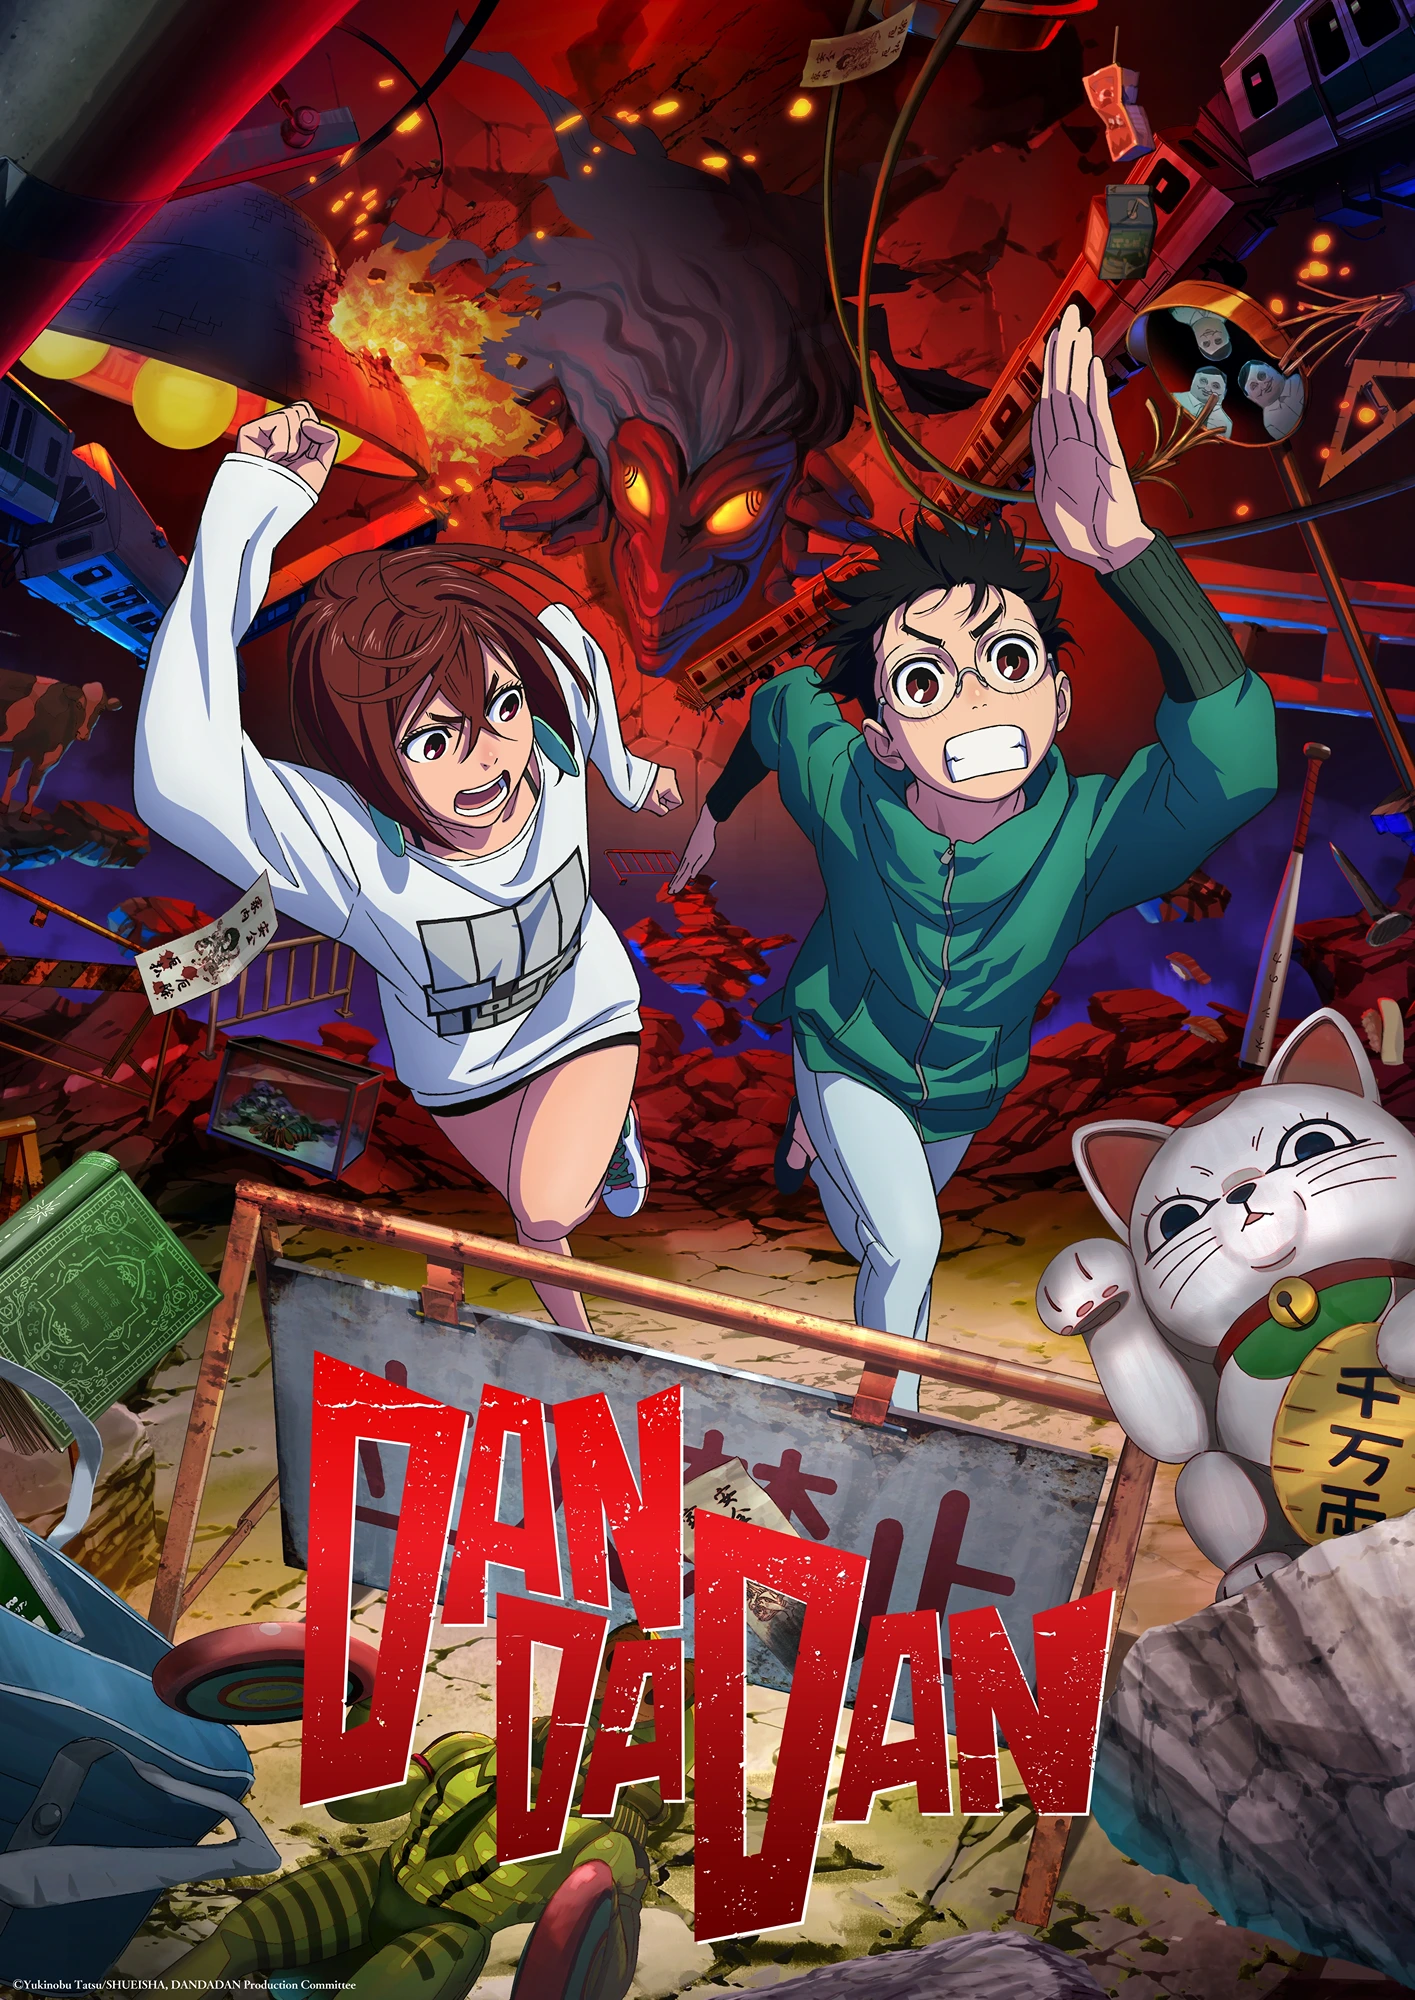 DAN DA DAN Anime Releases a New Trailer With a Stunning Key Visual